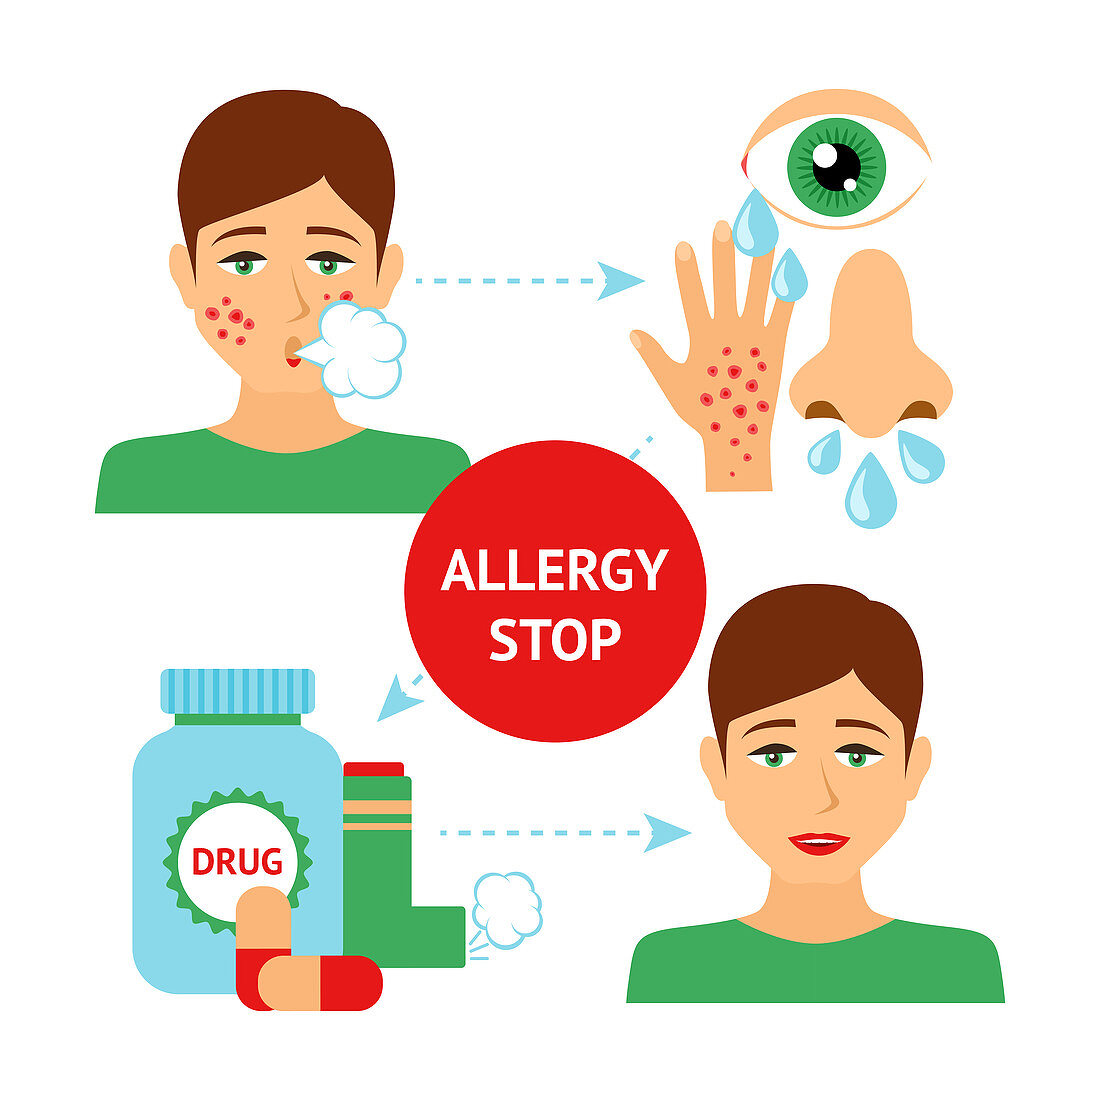 Allergy treatment, illustration